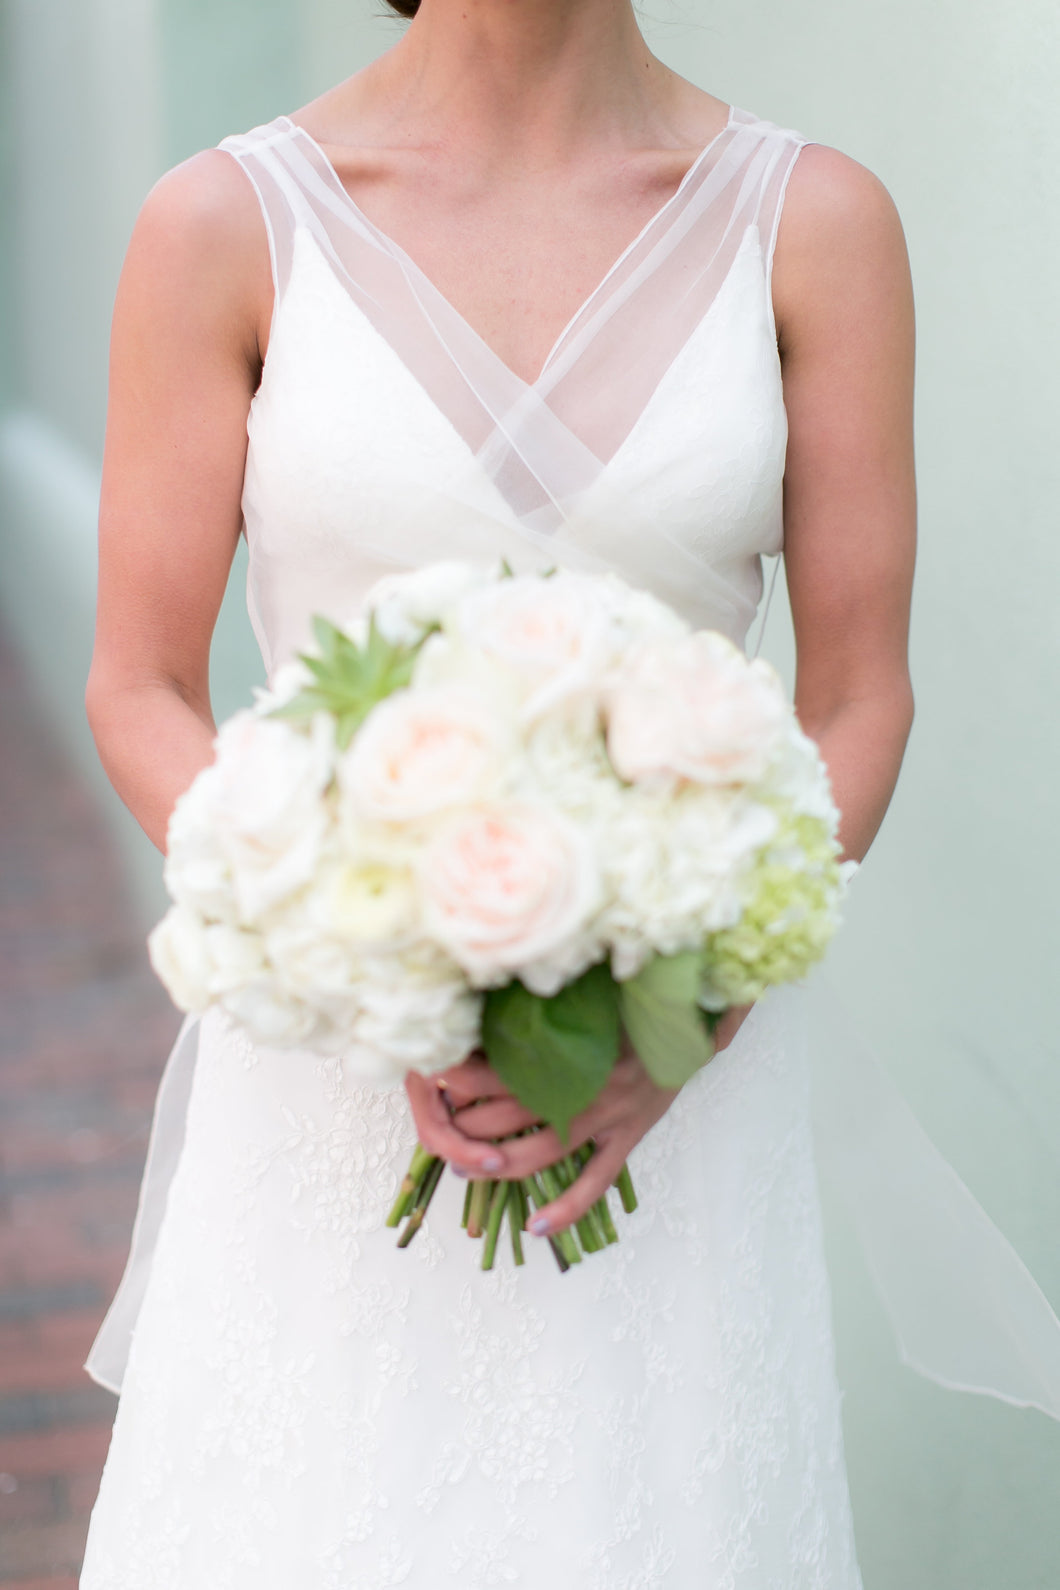 Alyne 'Jasmine' size 4 used wedding dress front view on bride